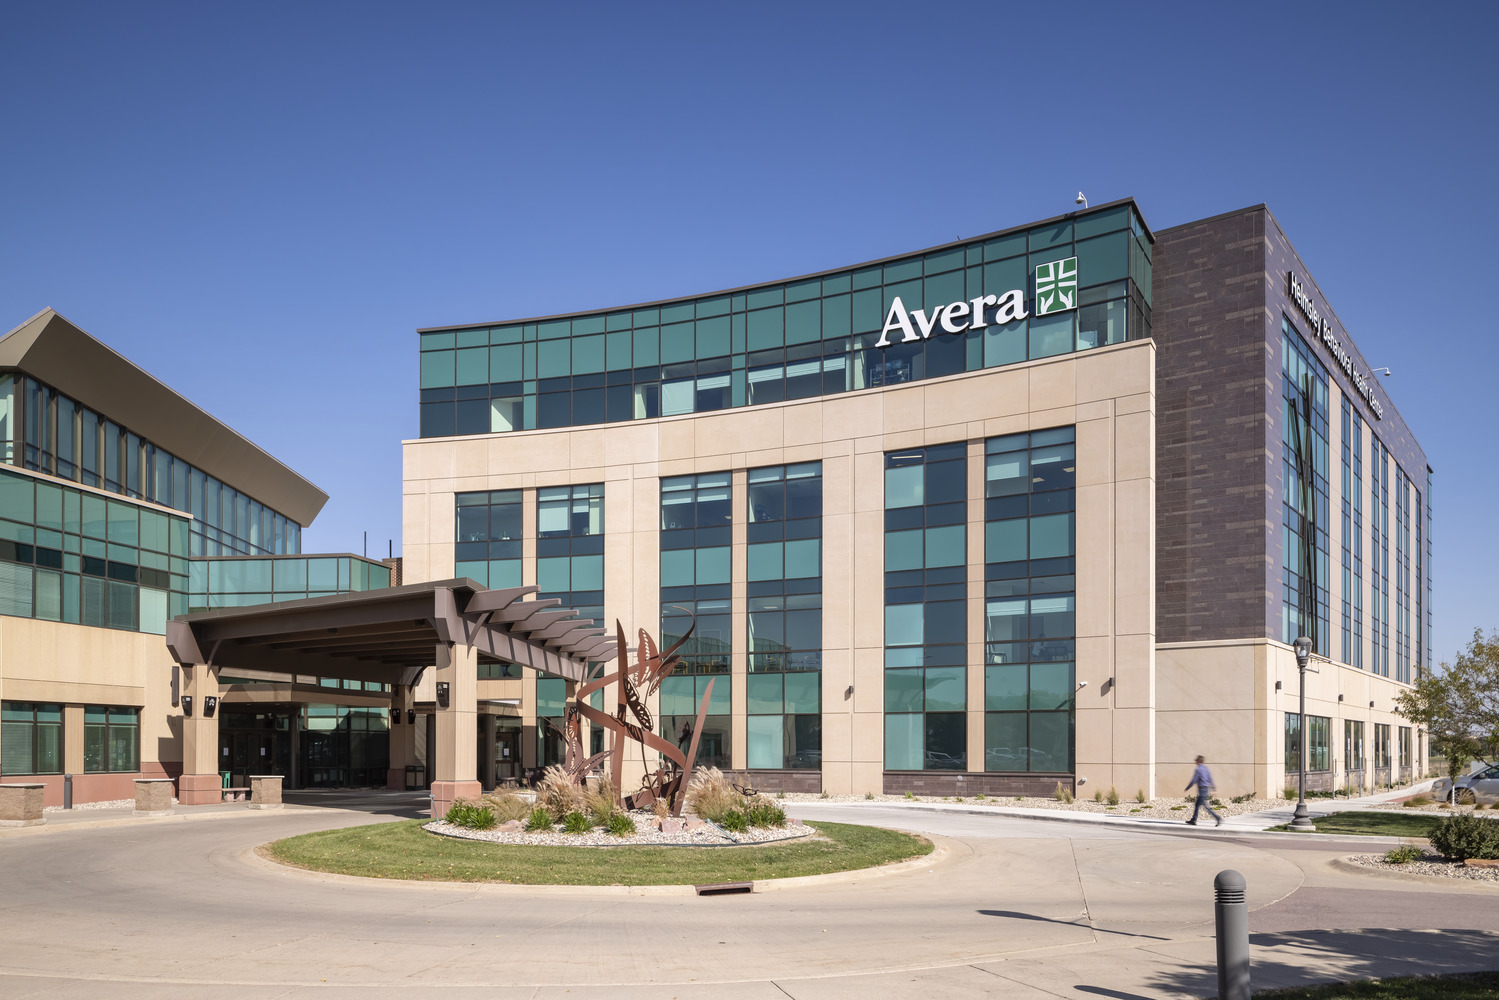 Avera Behavioral Health Center: A 5-Year Post Occupancy Study